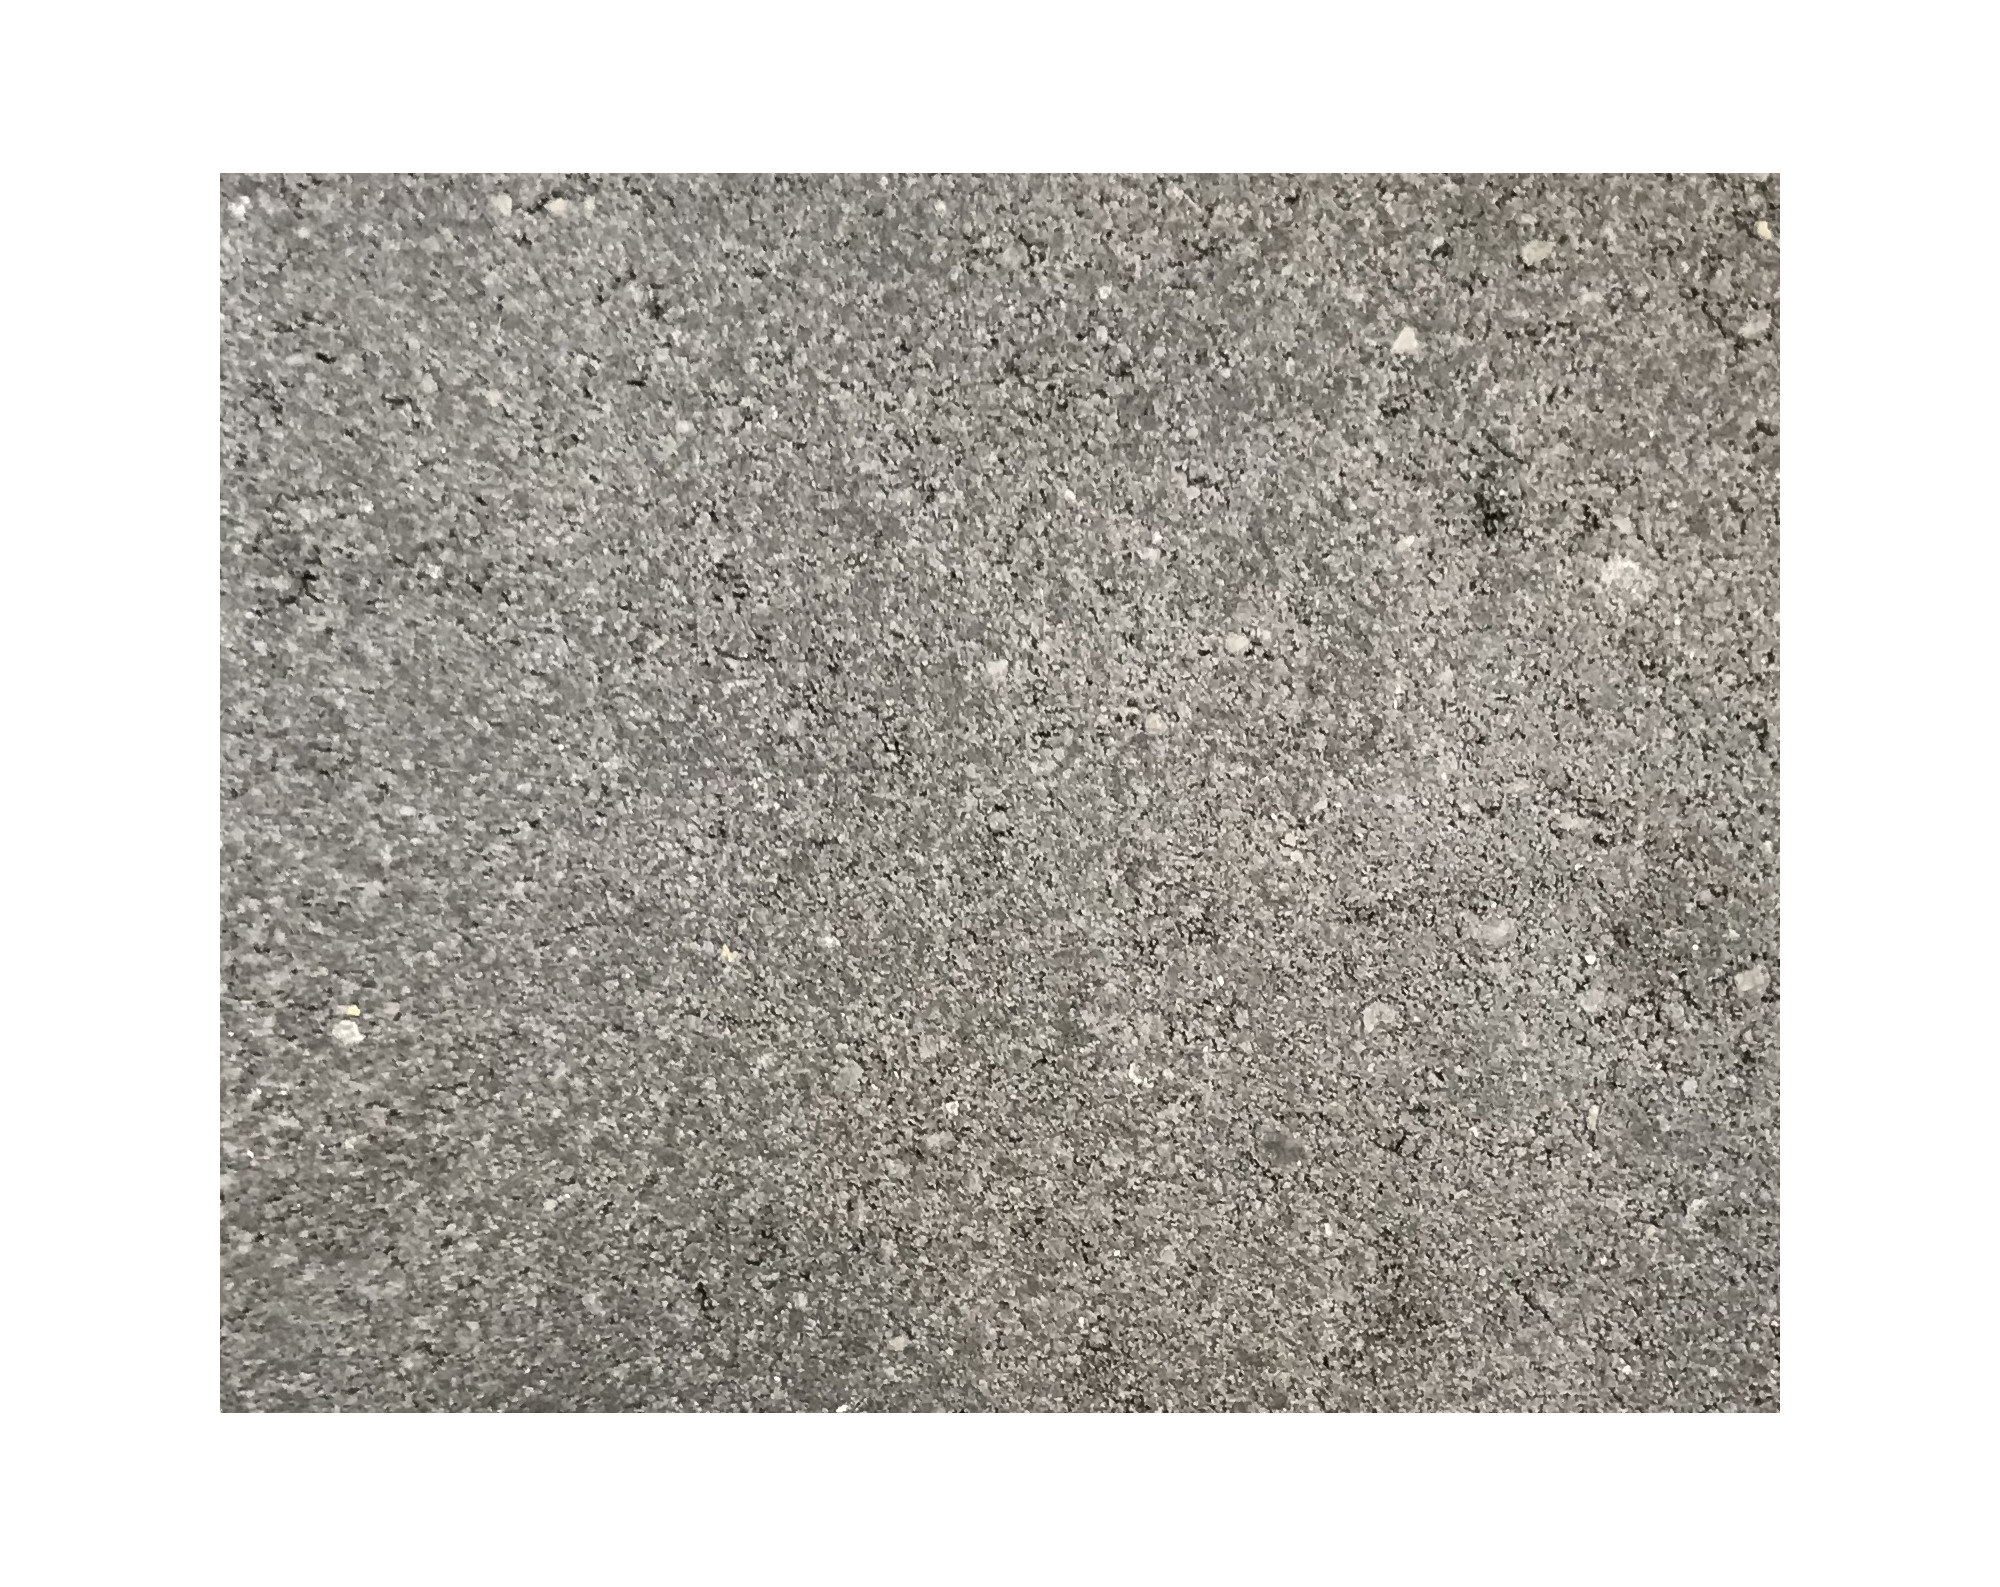 Harmo roc nevadaset, rustica-serie, ovaal d: 6,00mx11,30m, a.zwart, beton